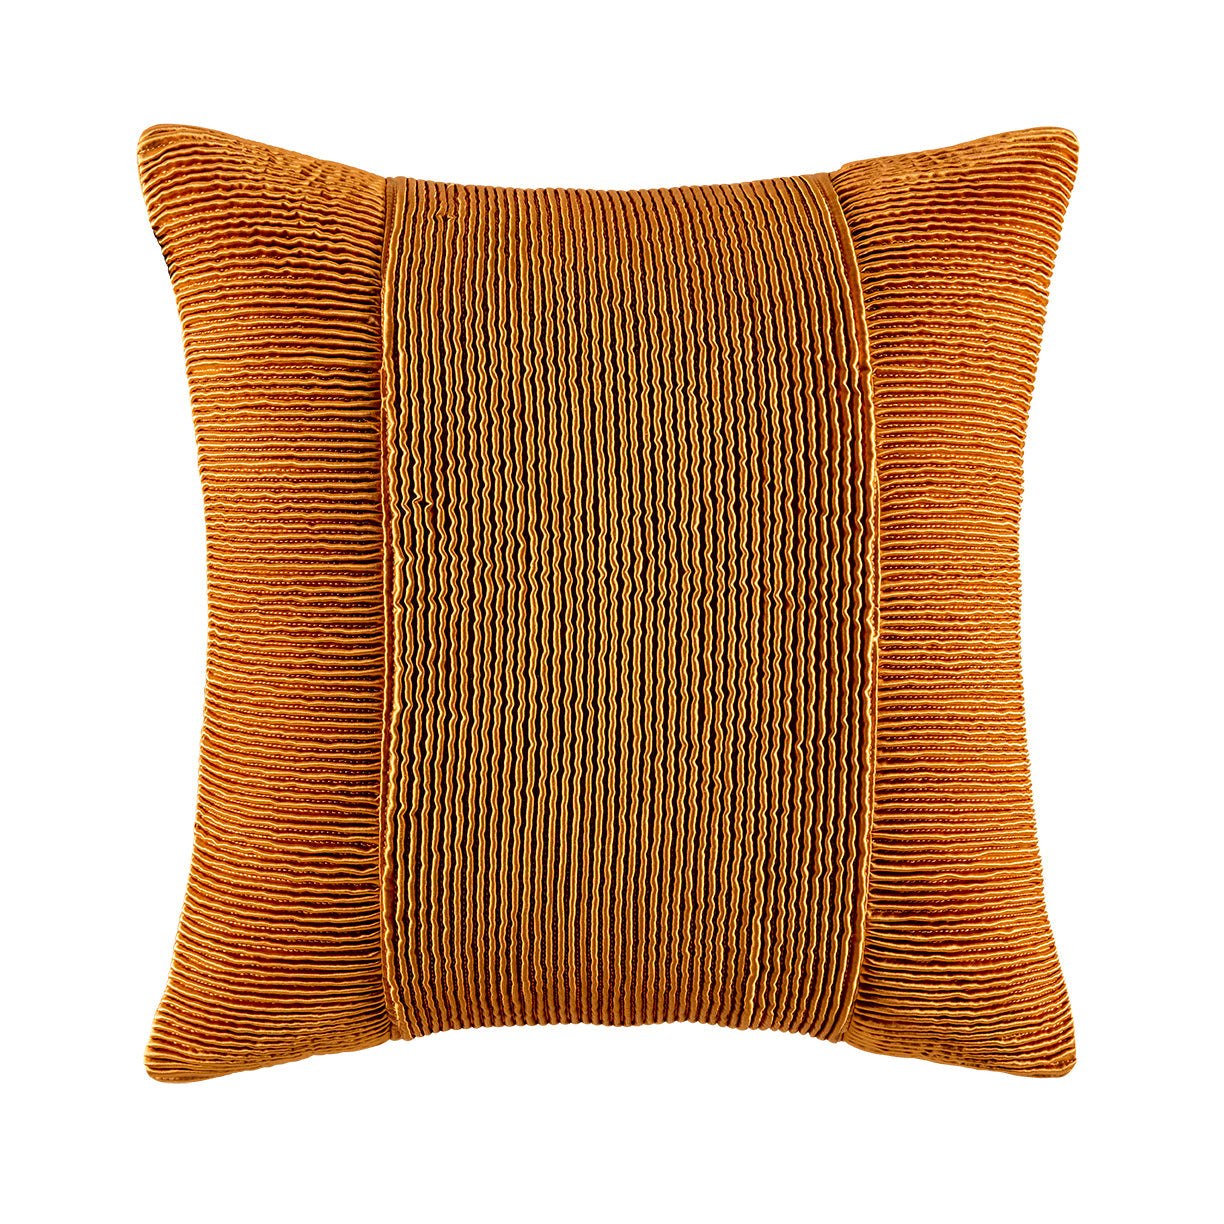 Linea Cushion Cushion HARRIS SCARFE Mustard Square 50x50cm